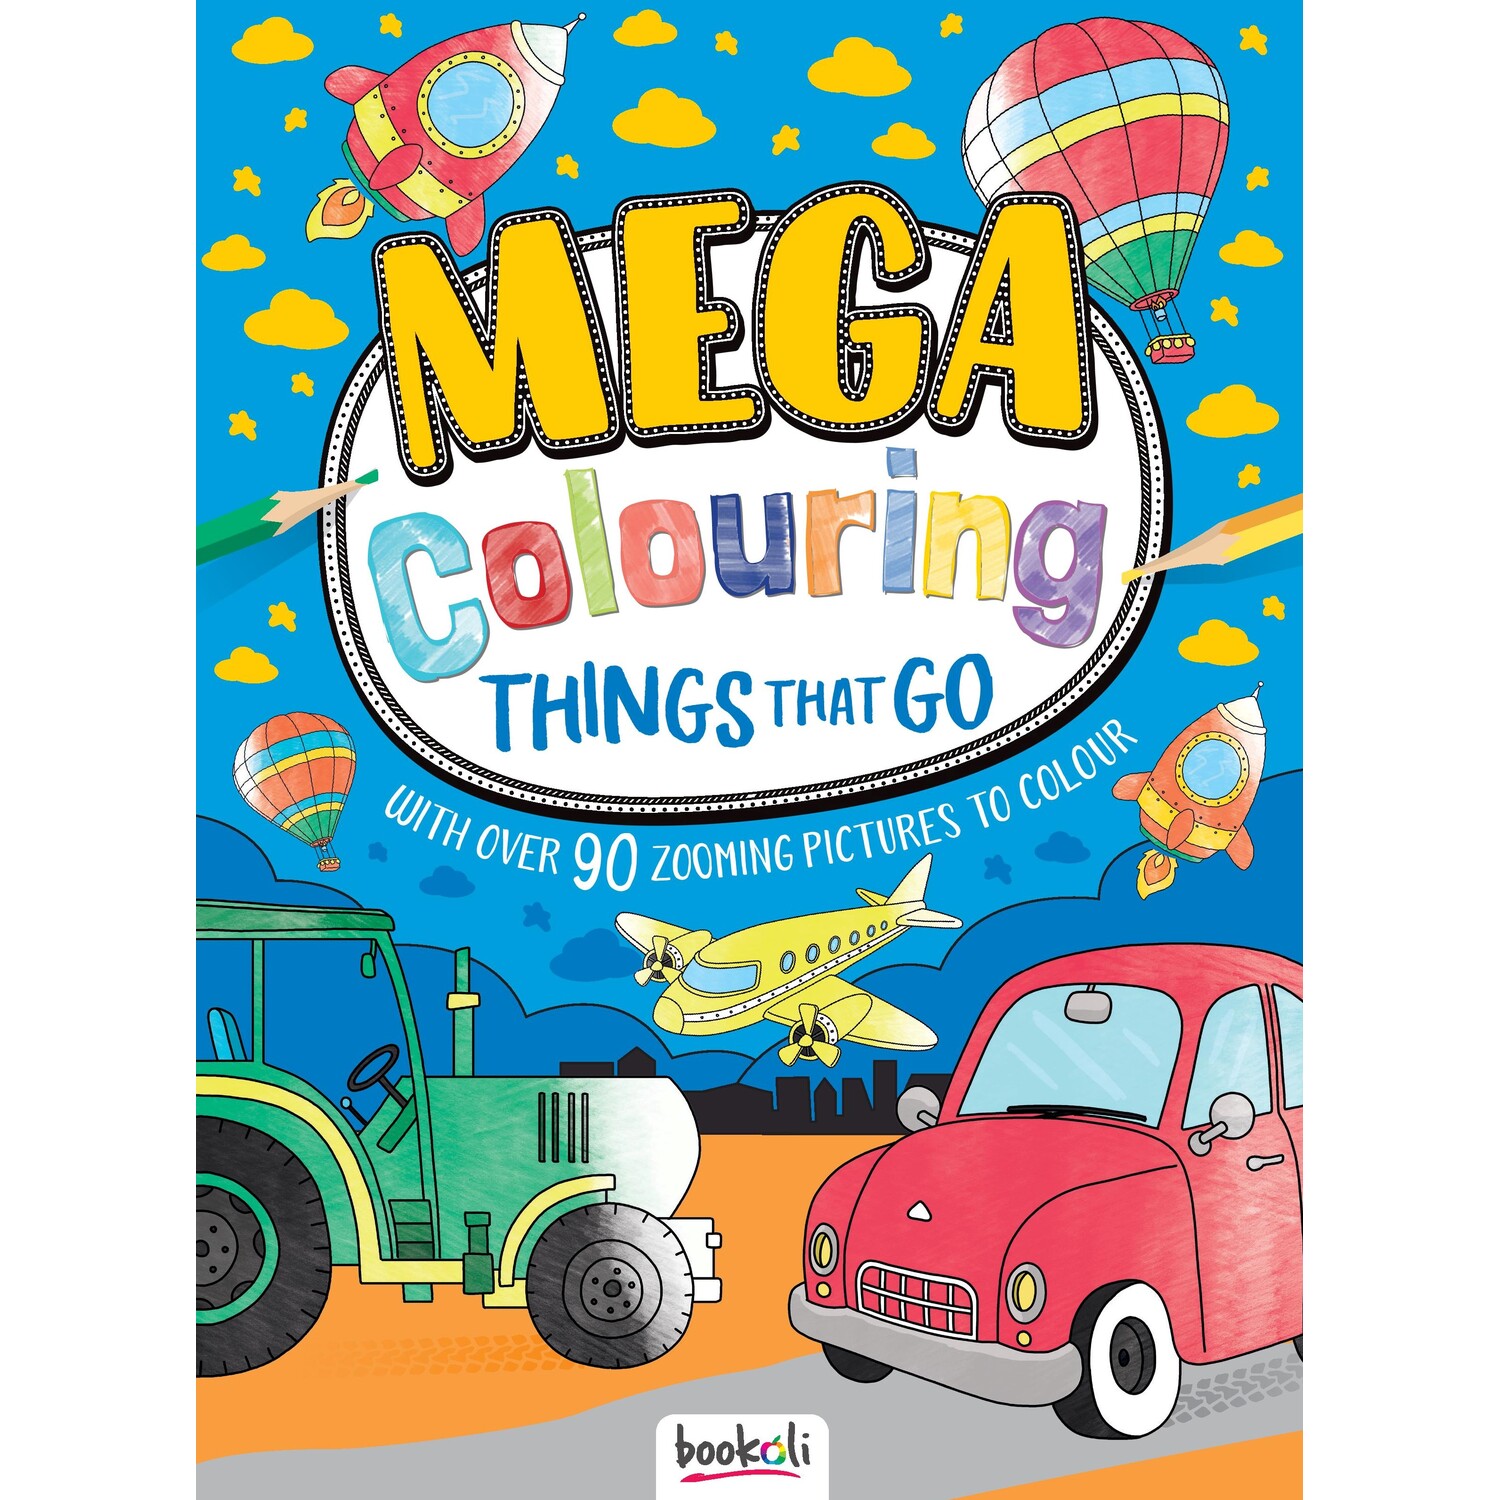 Mega Colouring Books - Things That Go Image